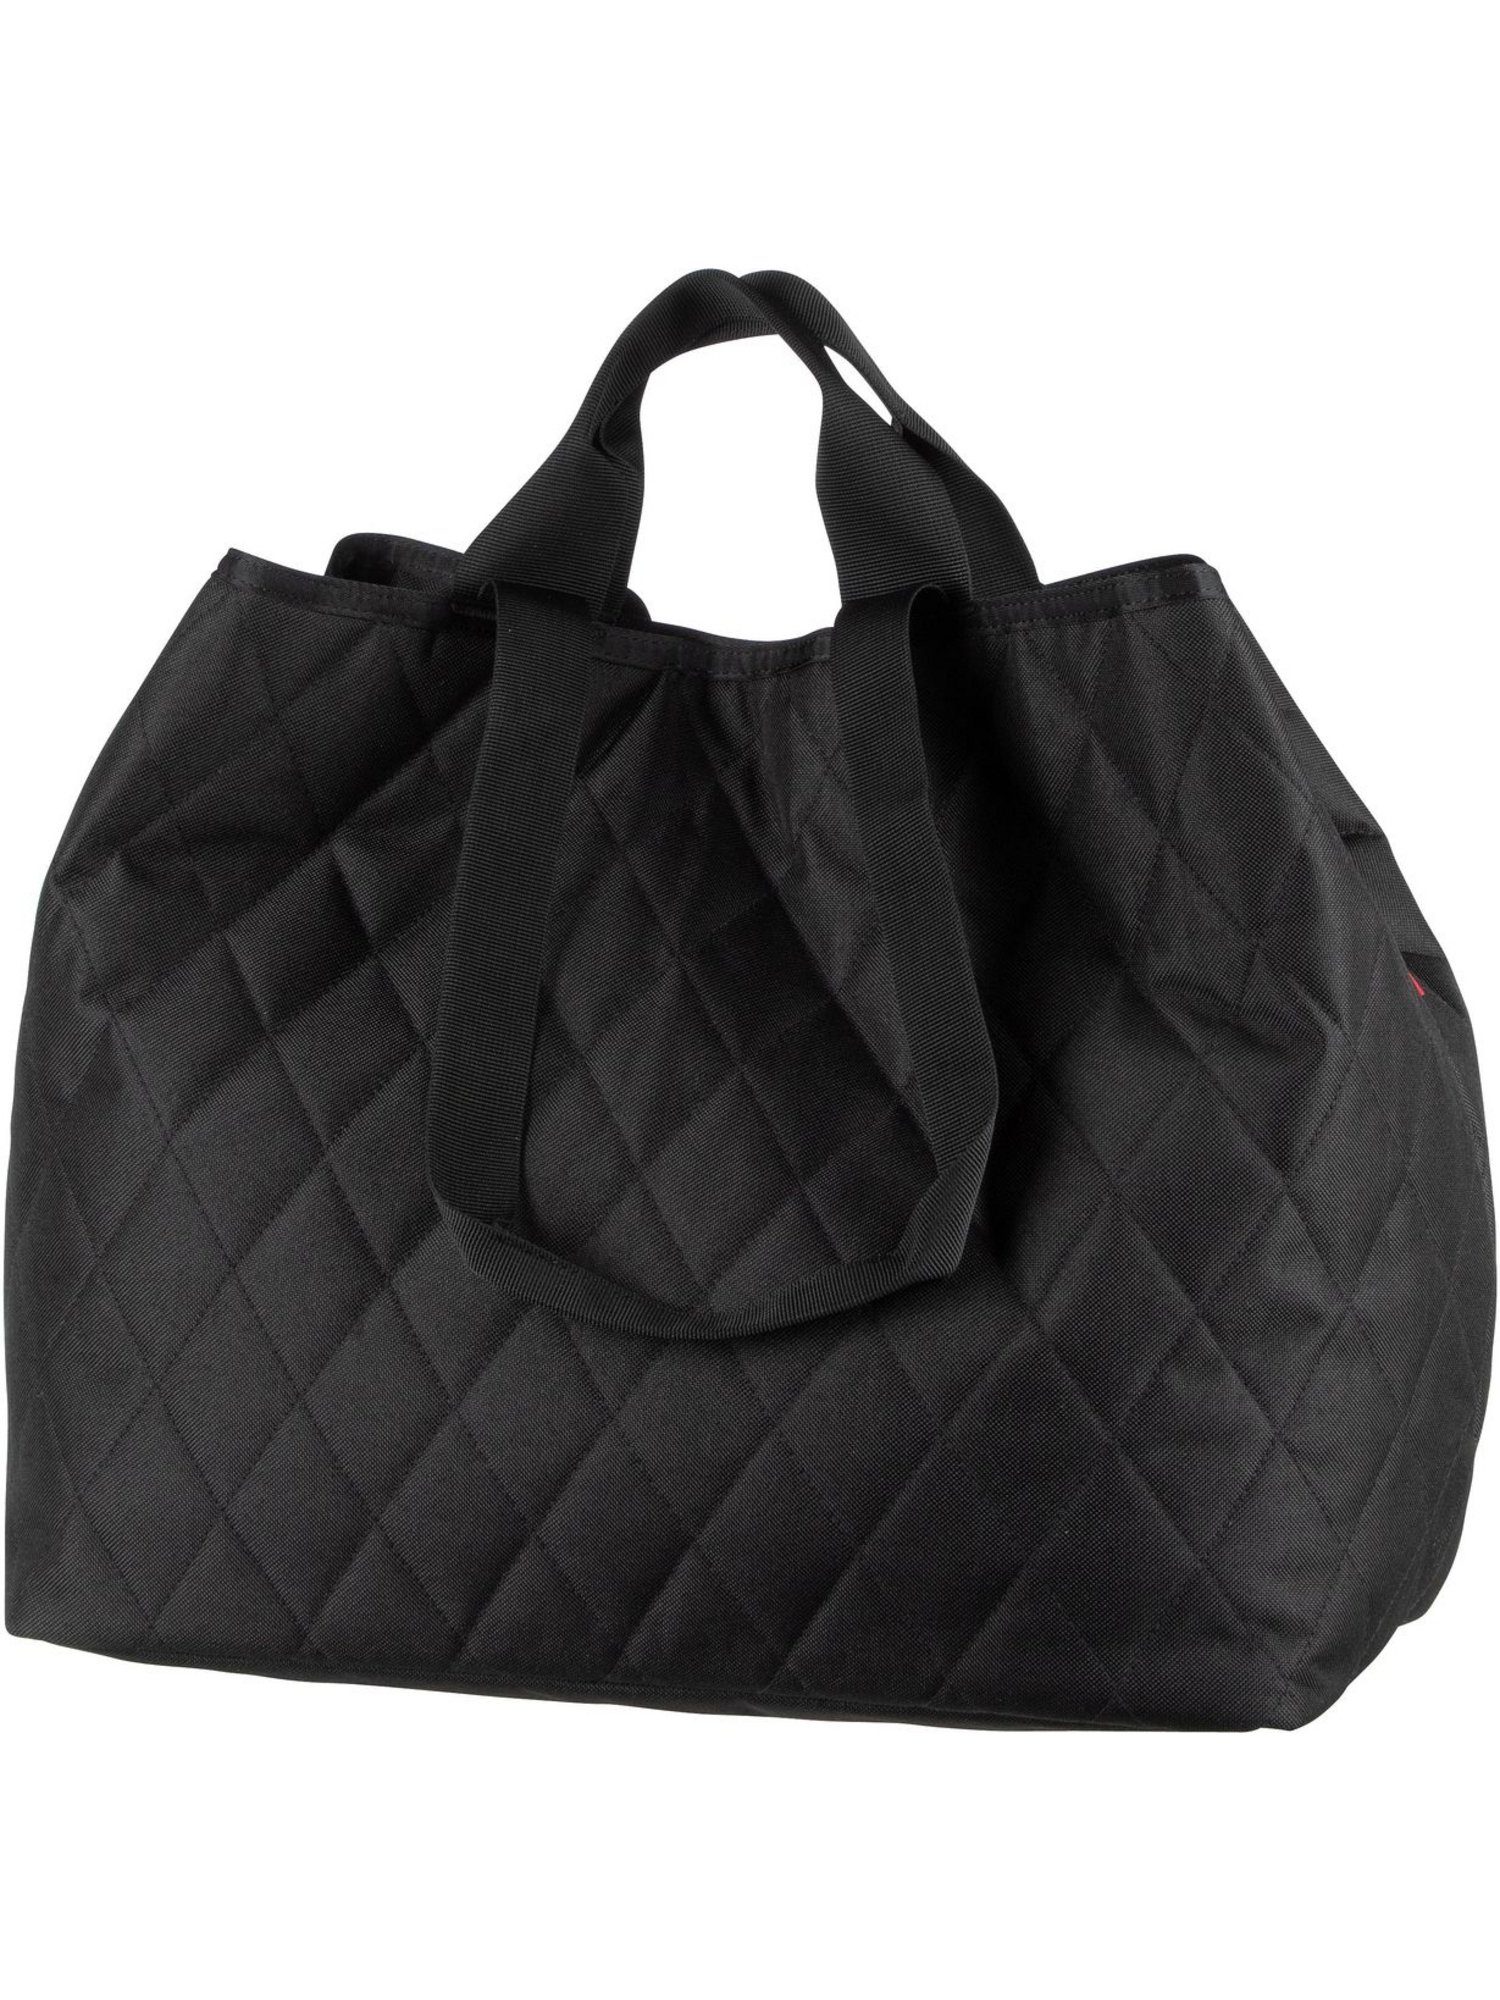 Rhombus classic XL shopper Shopper Black REISENTHEL®